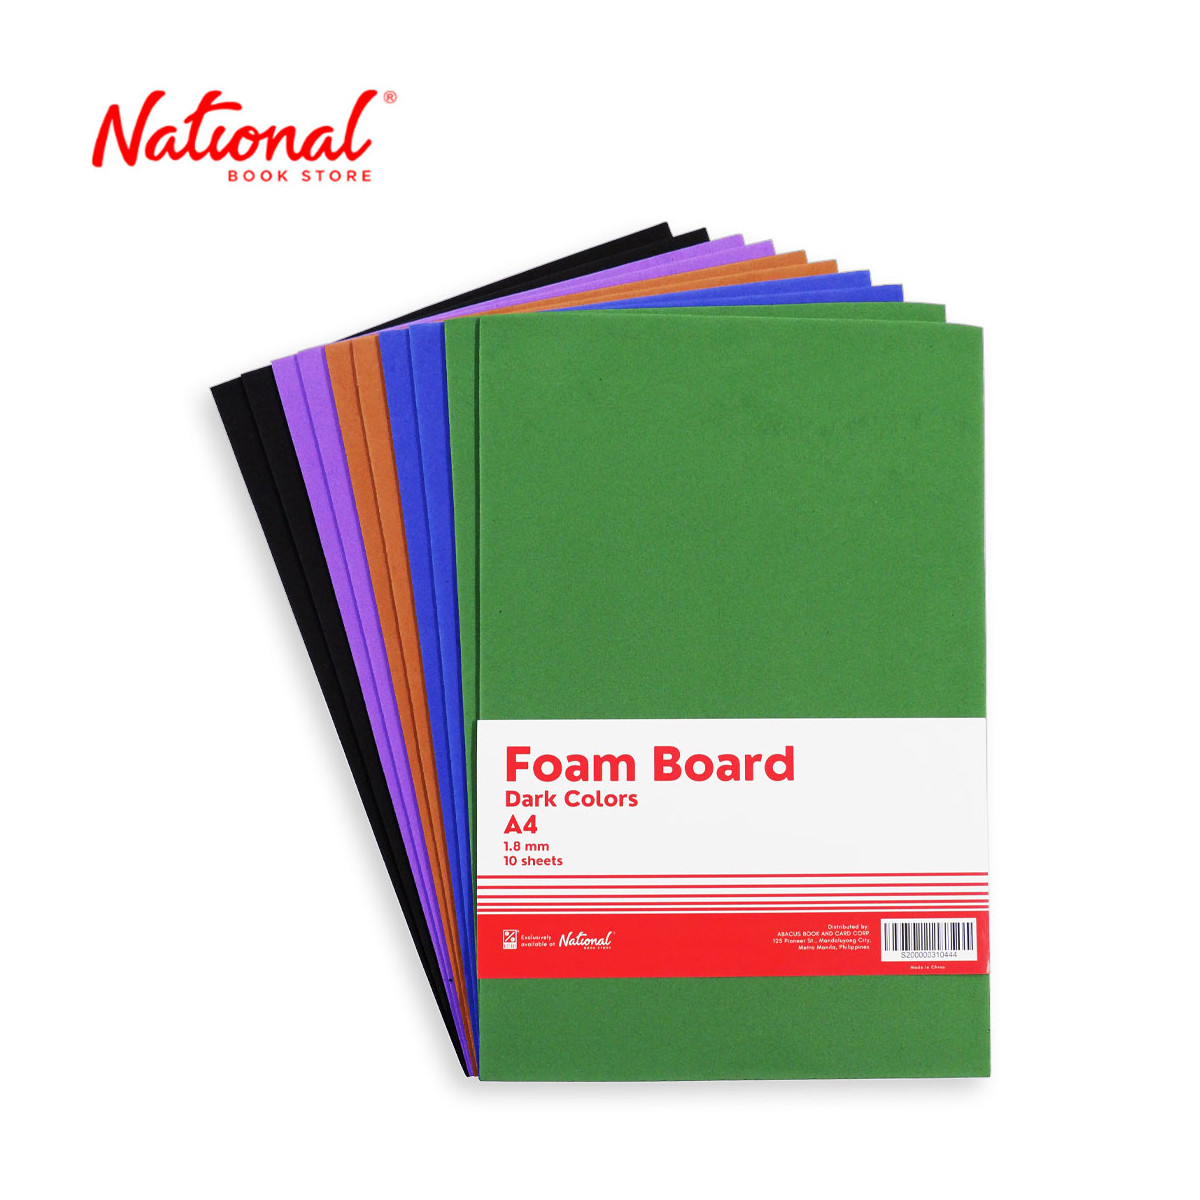 Best Buy Foam Board A4 Dark Colors 10 sheets - School & Office Supplies - DIY Arts & Crafts